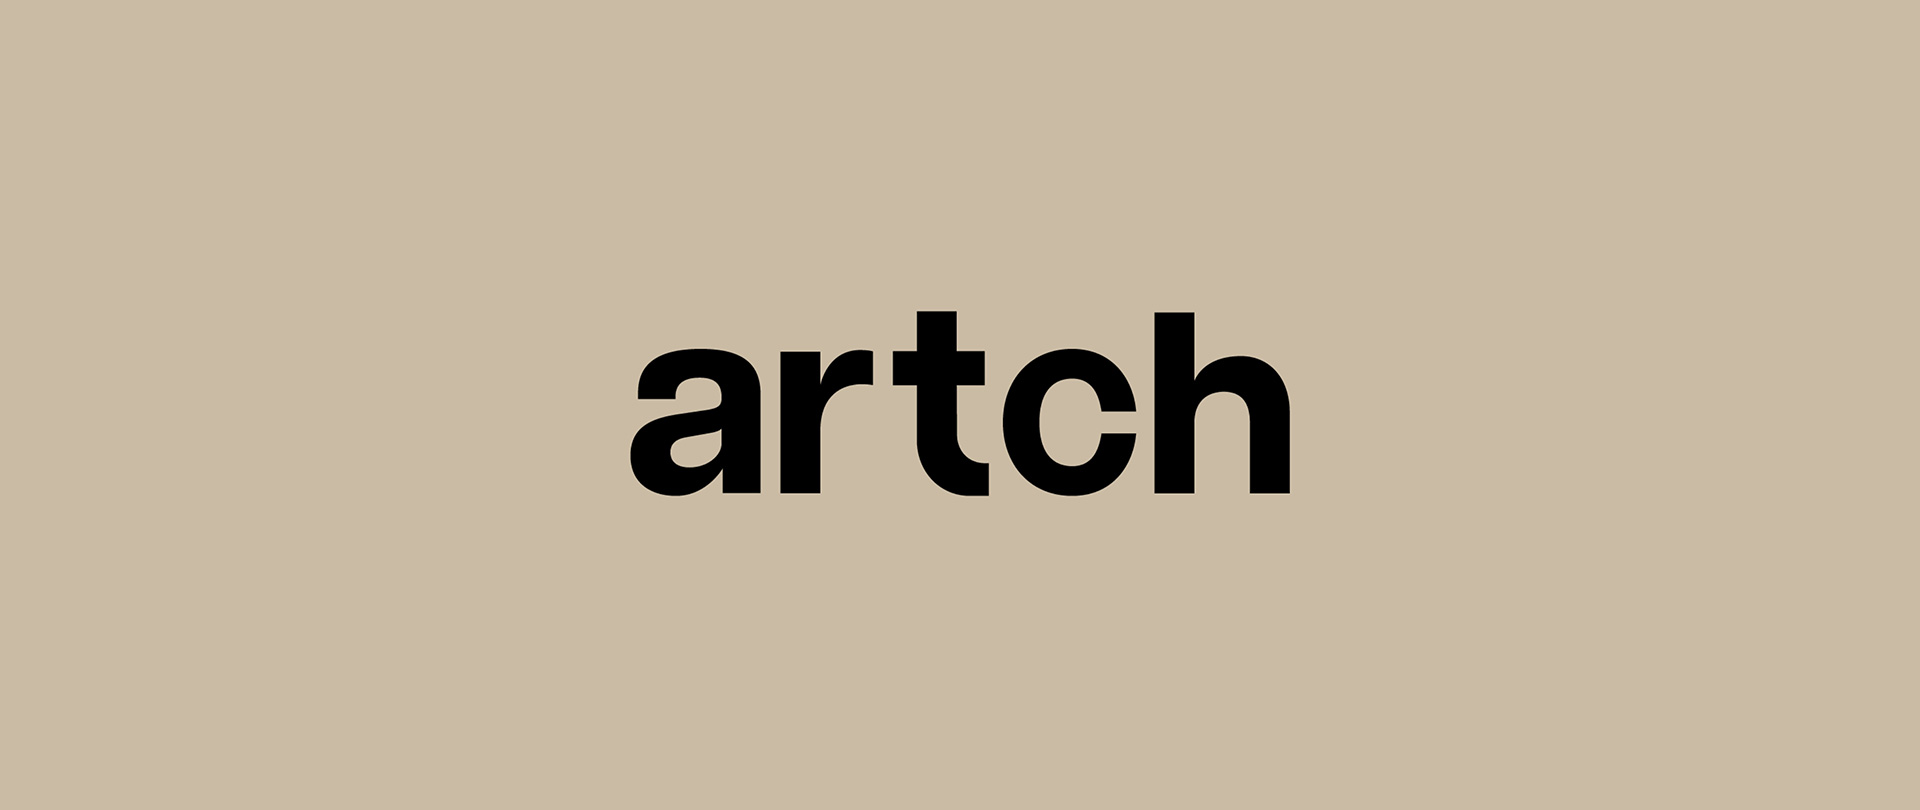 Logo artch noir sur fond beige